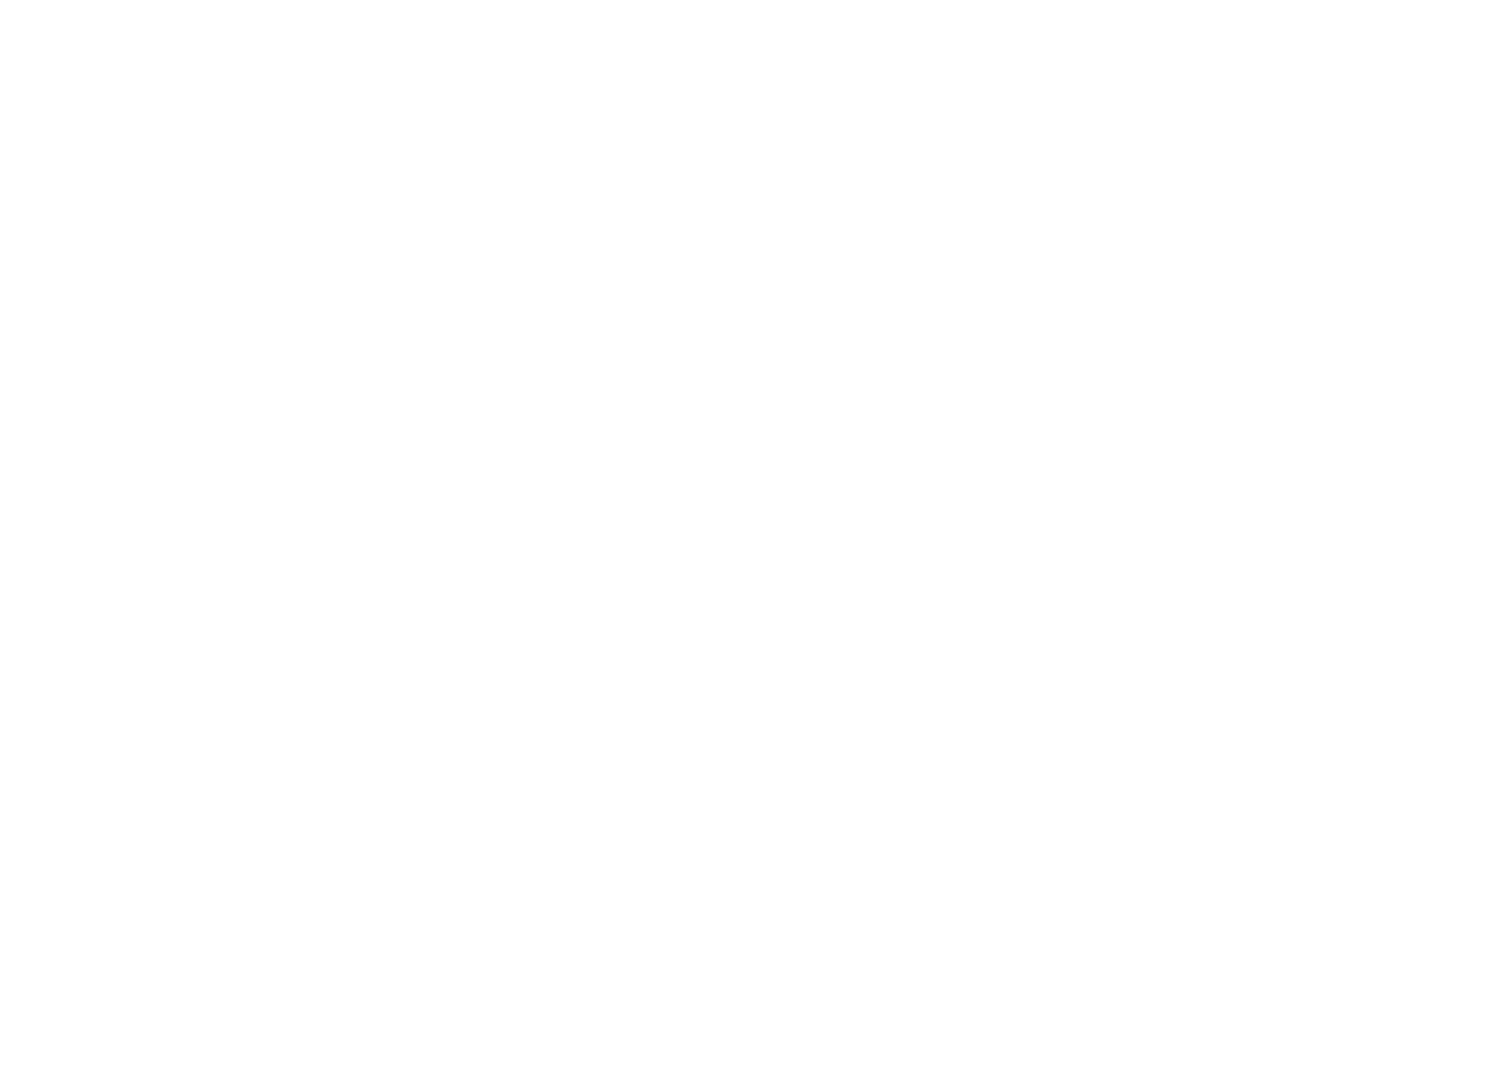 Sandbothe Strong